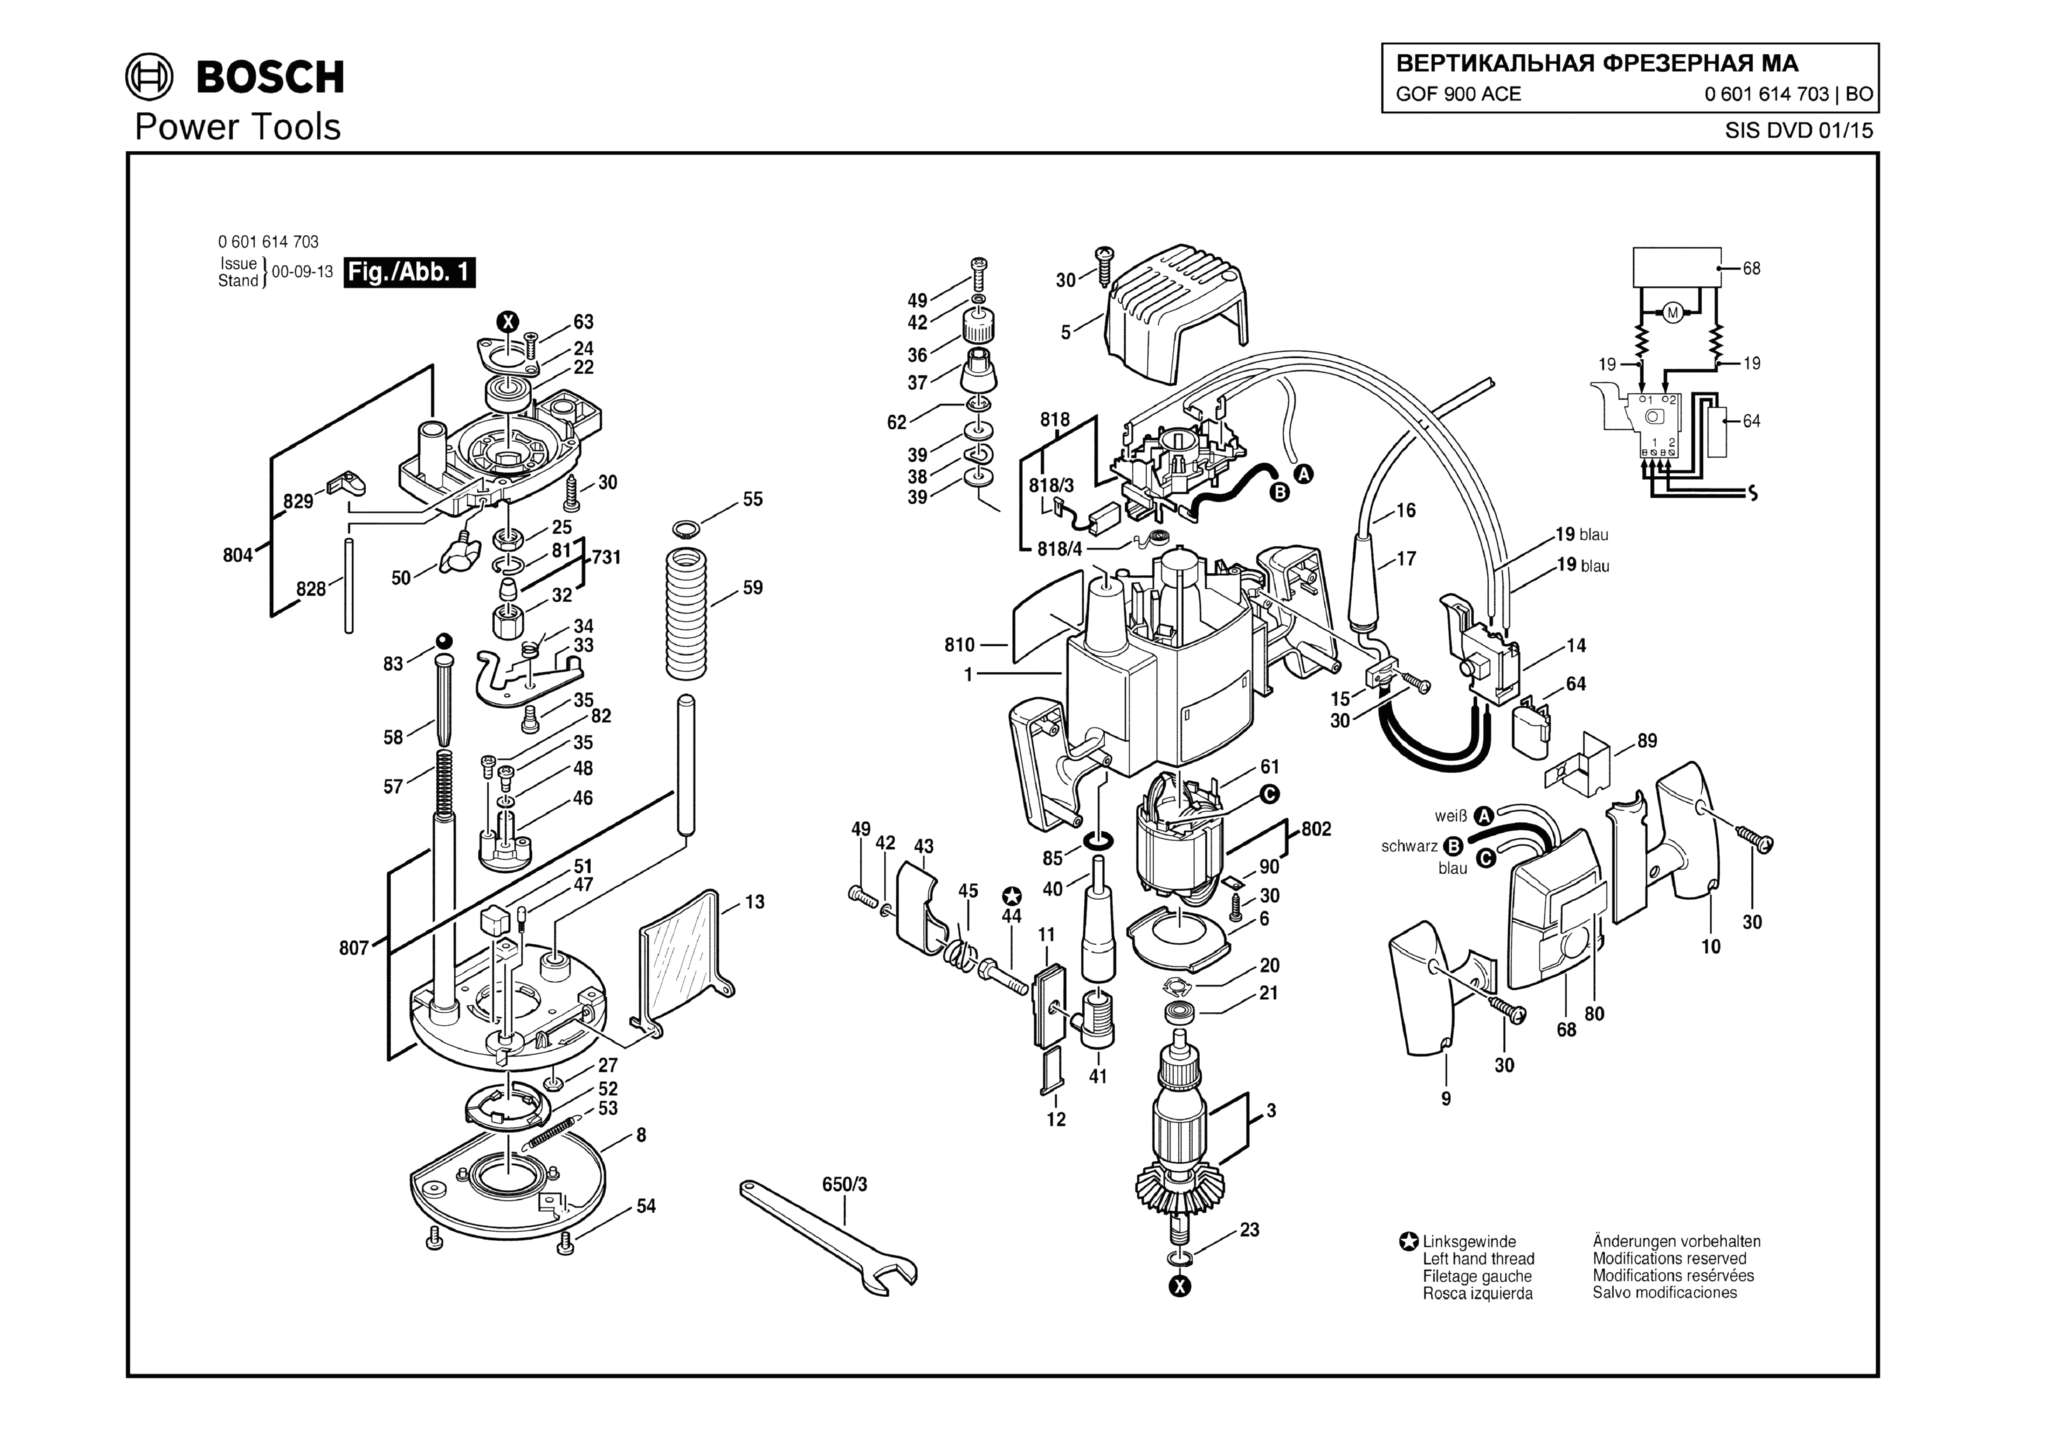 Запчасти, схема и деталировка Bosch GOF 900 ACE (ТИП 0601614703)